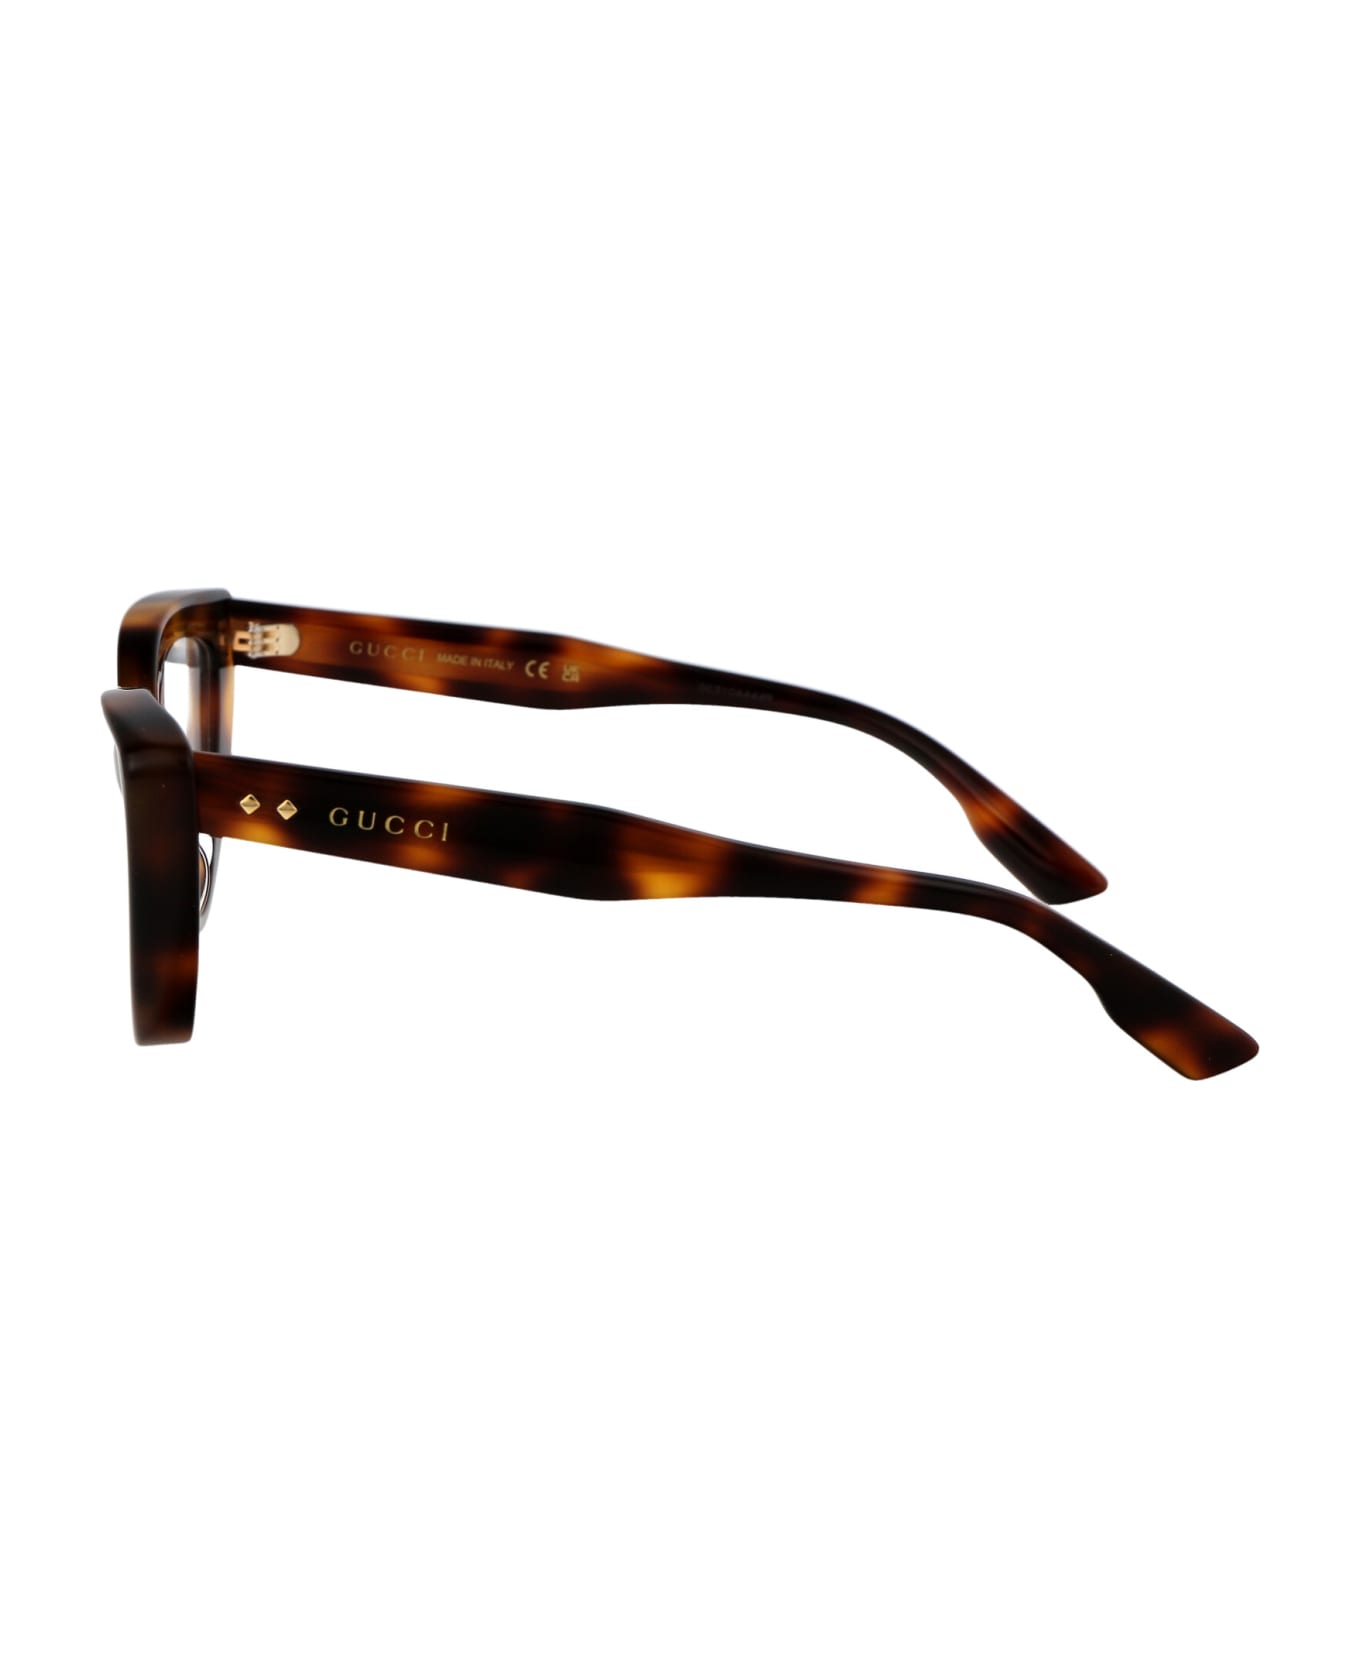 Gucci Eyewear Gg1530o Glasses - 002 HAVANA HAVANA TRANSPARENT